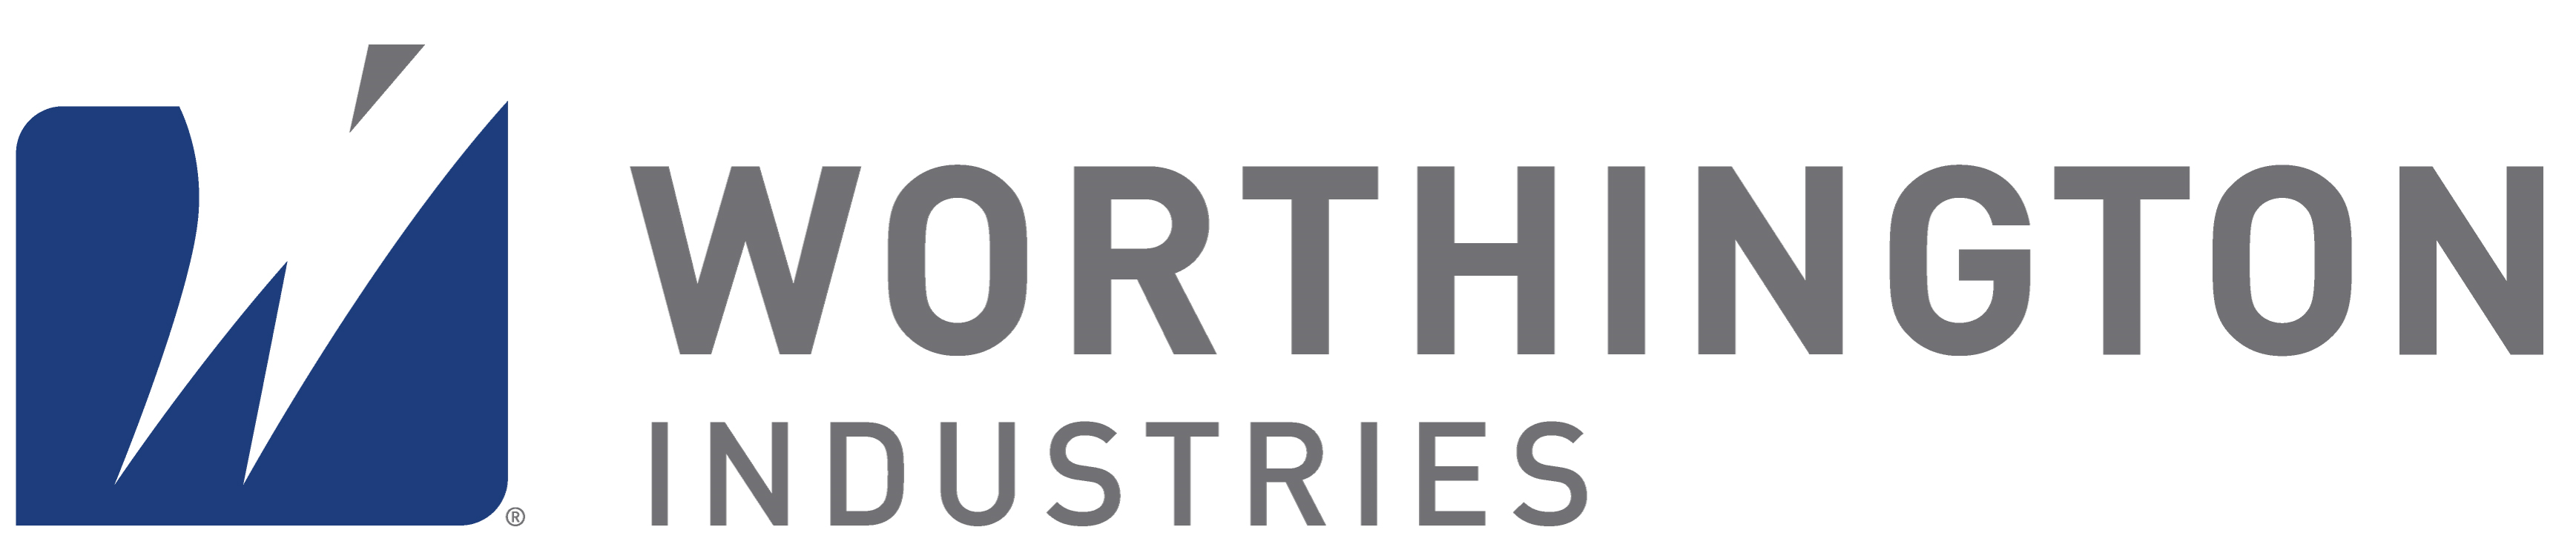 Worthington Industries Company Logo